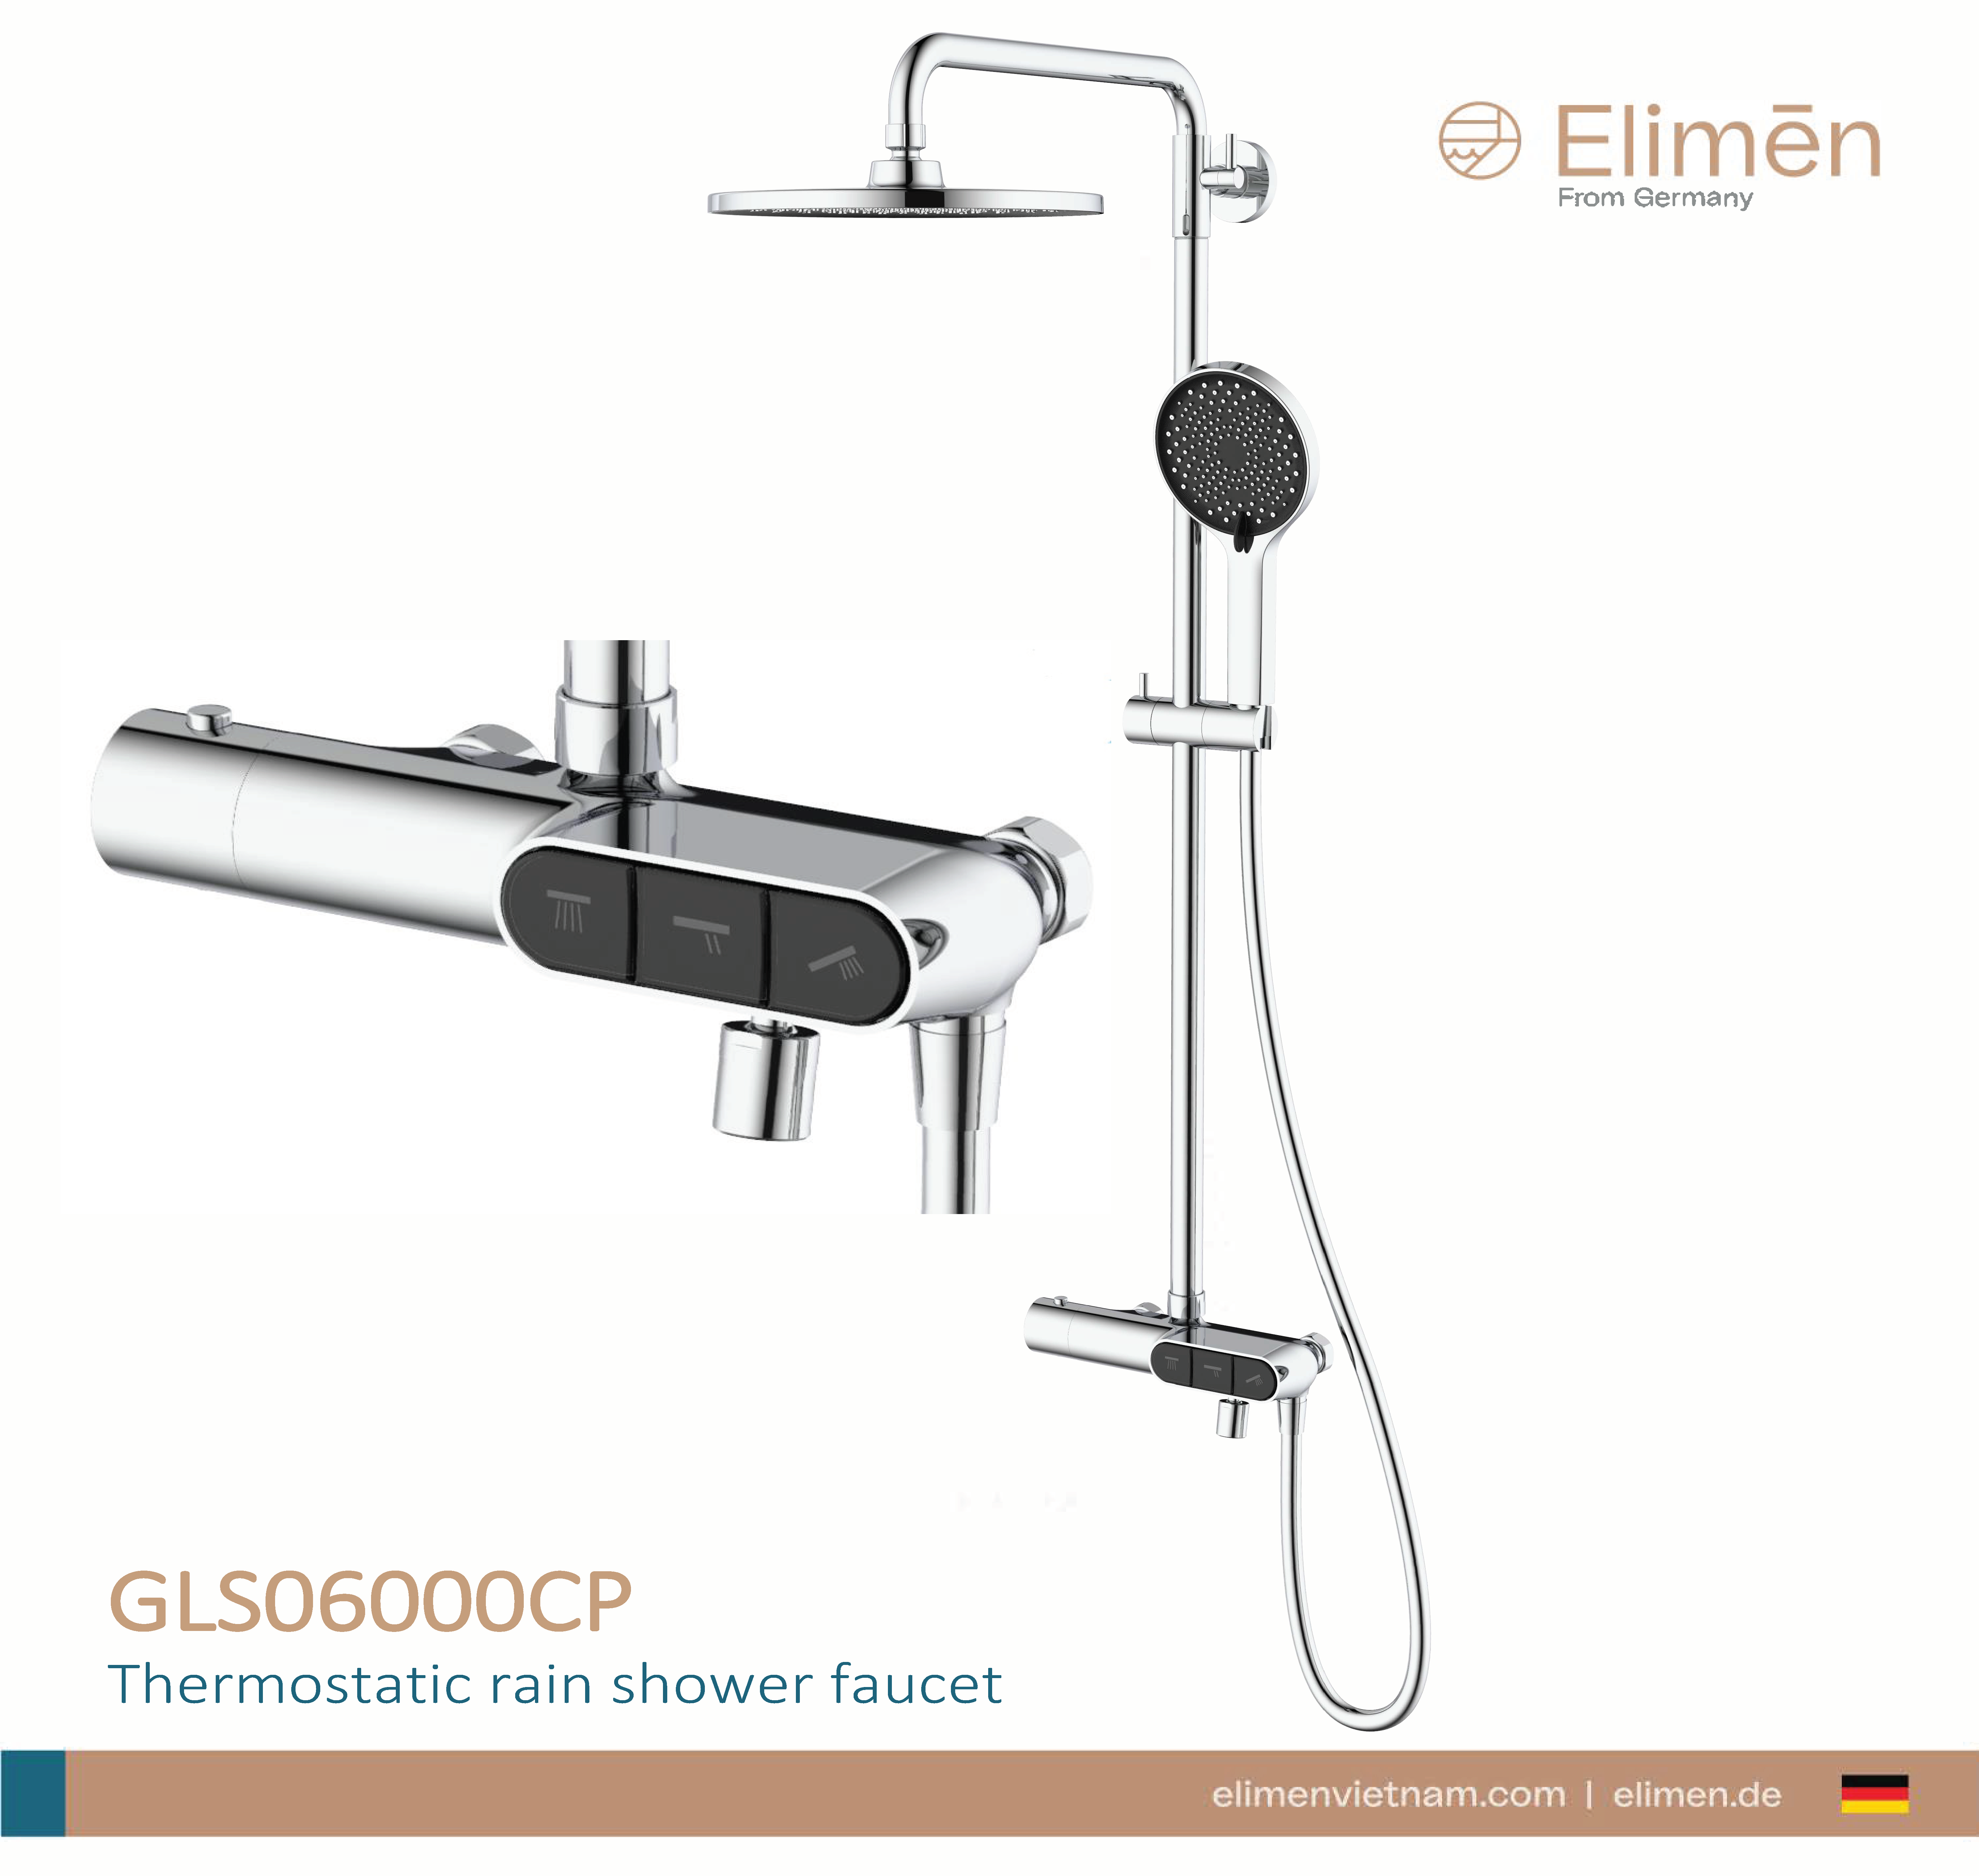 Sen cây tắm Elimen - Mã GLS06000CP